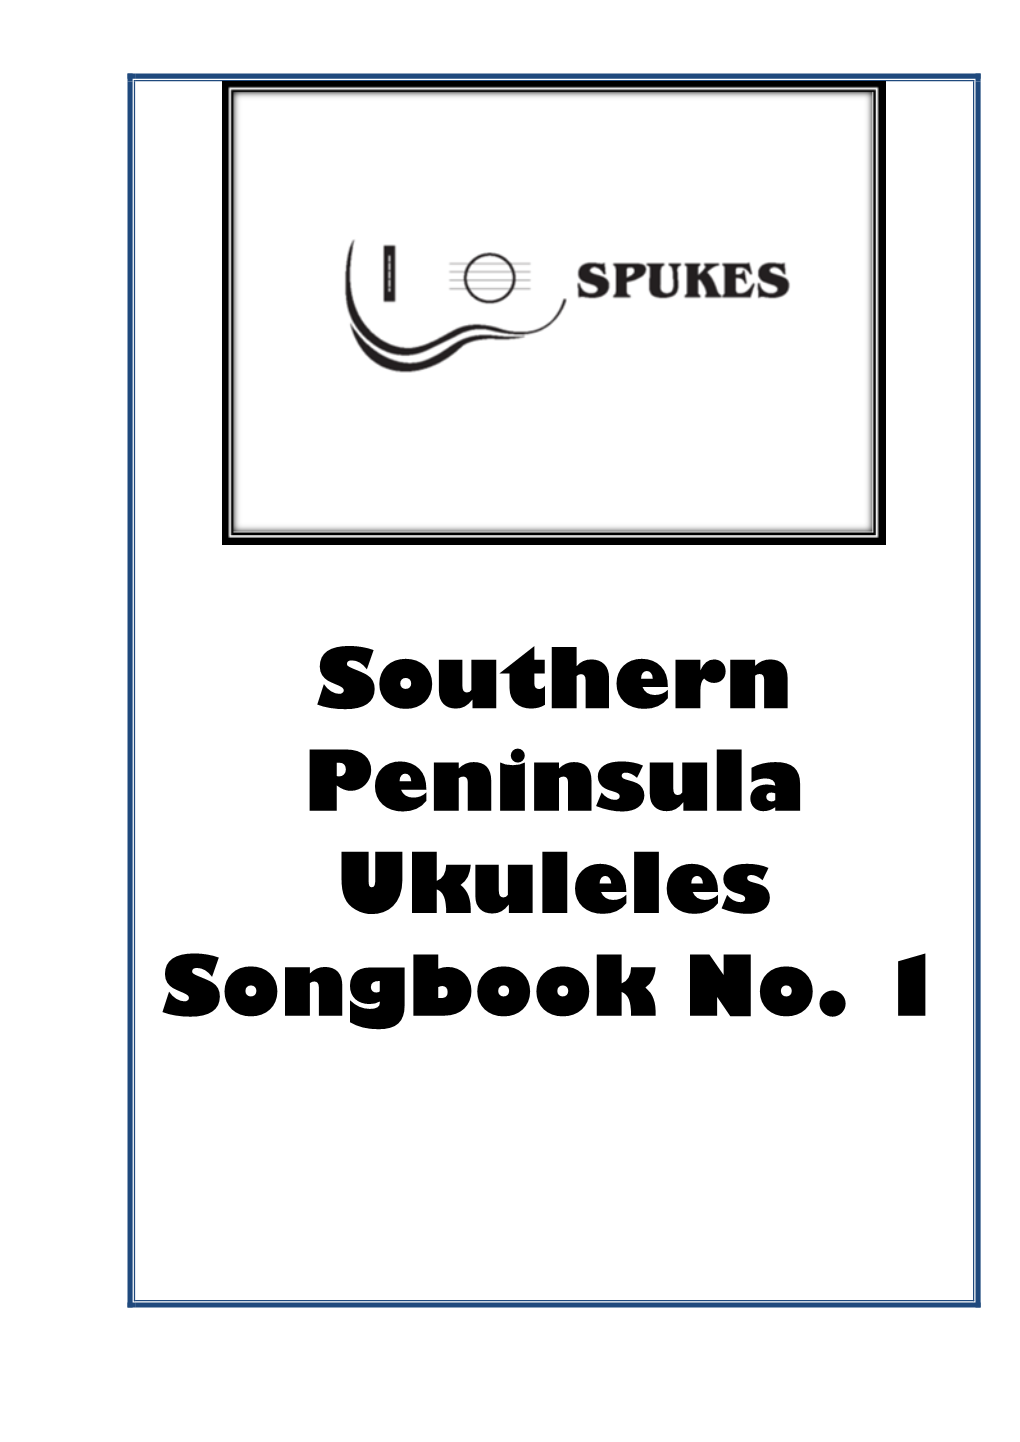 Southern Peninsula Ukuleles Songbook No. 1